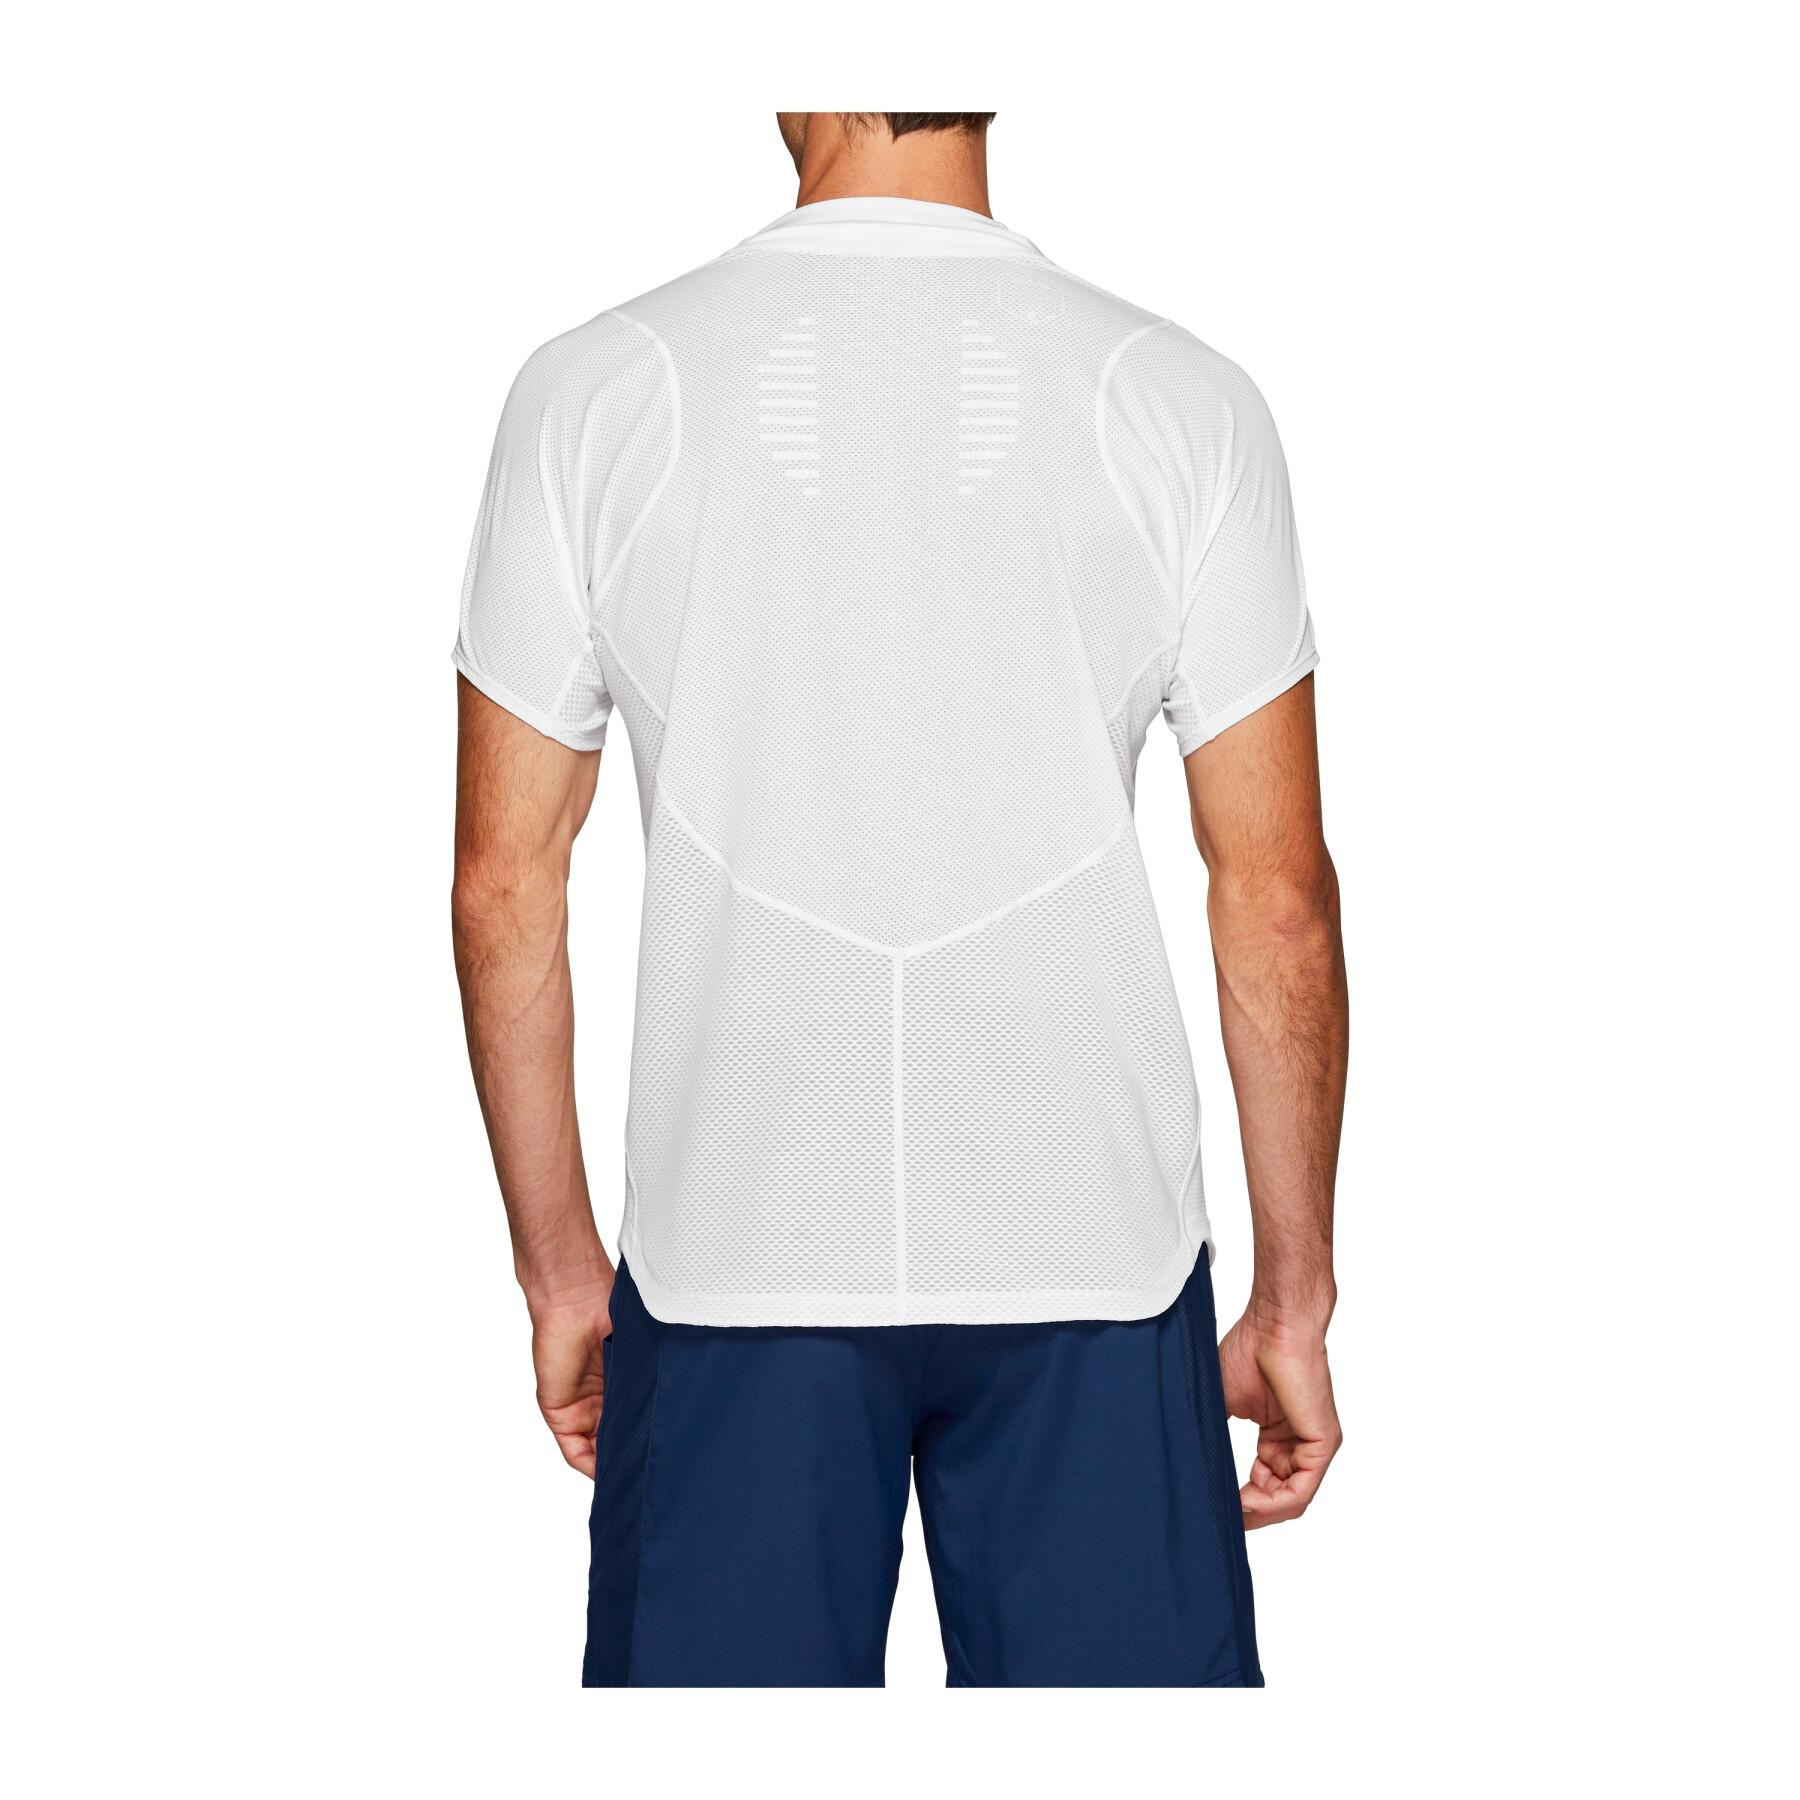 Camiseta Asics Gel Cool Top tennis